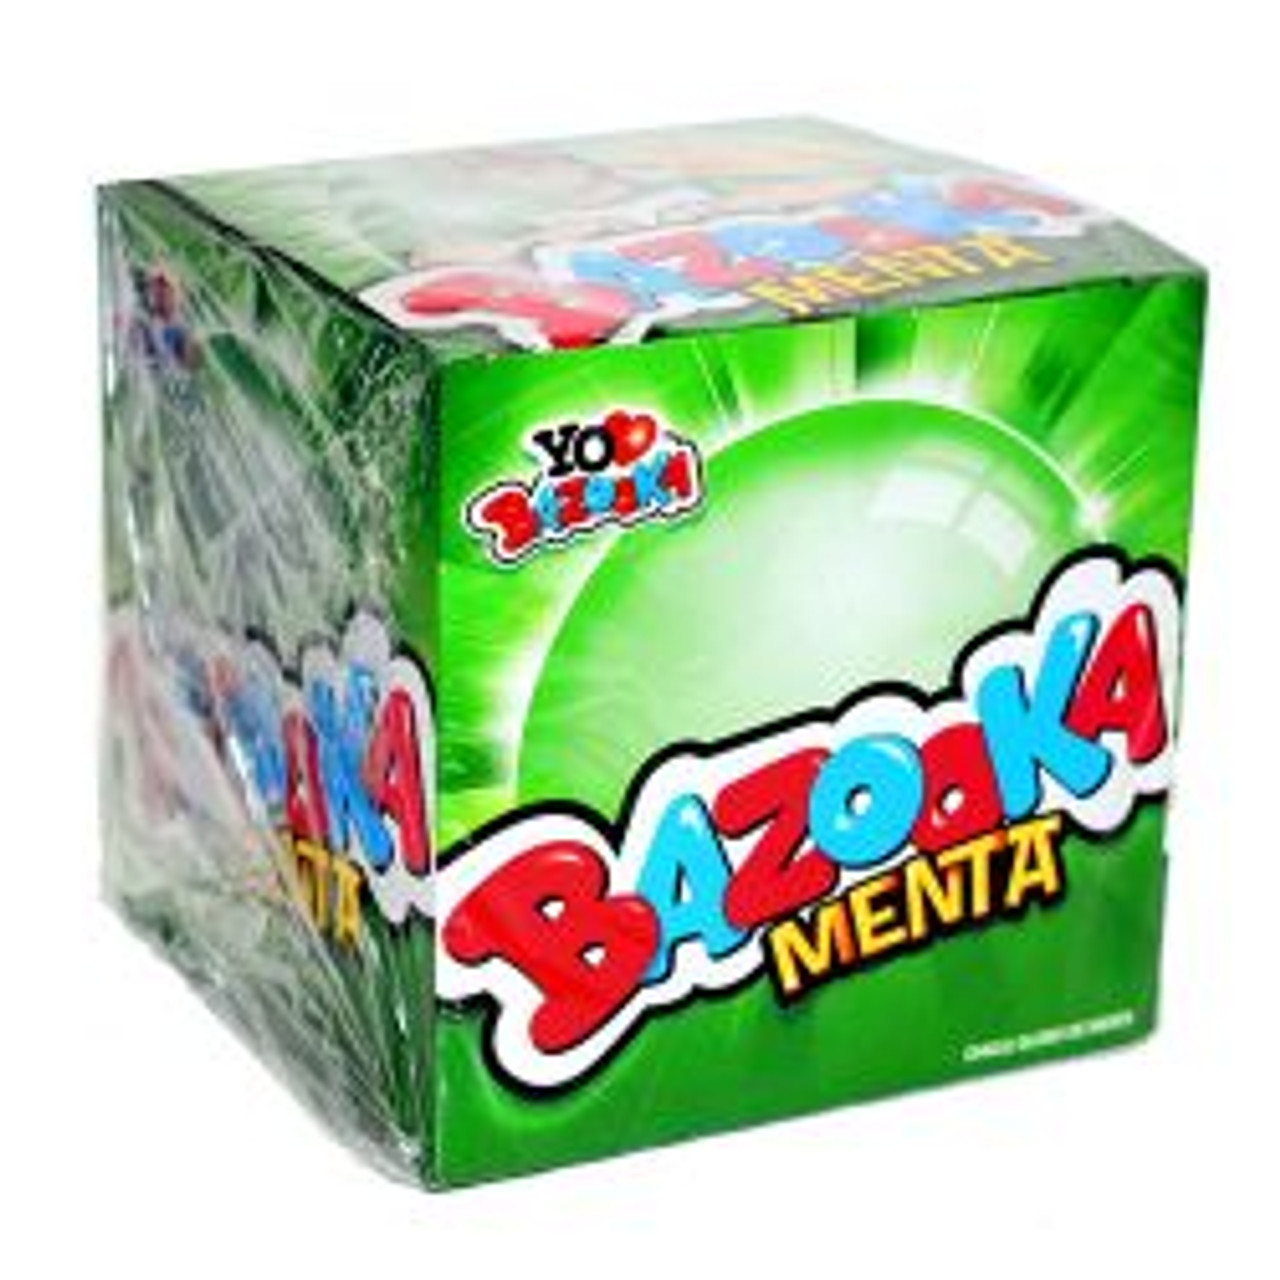 Bella bazooka. Bazooka жвачка. Super Bazooka жевательная резинка. Bazooka конфеты. Bazooka Bubble Gum мыльные пузыри.